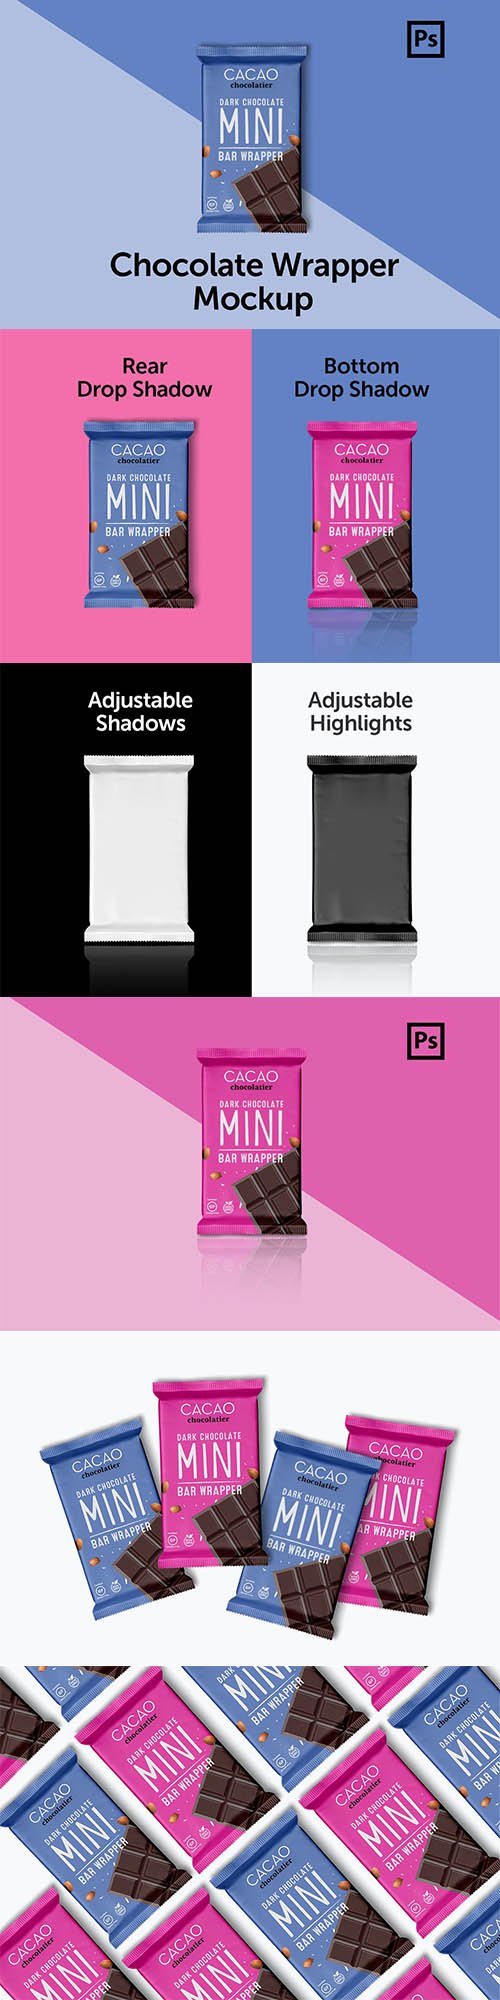 CreativeMarket - Mini Chocolate Wrapper Mockup - 3653302